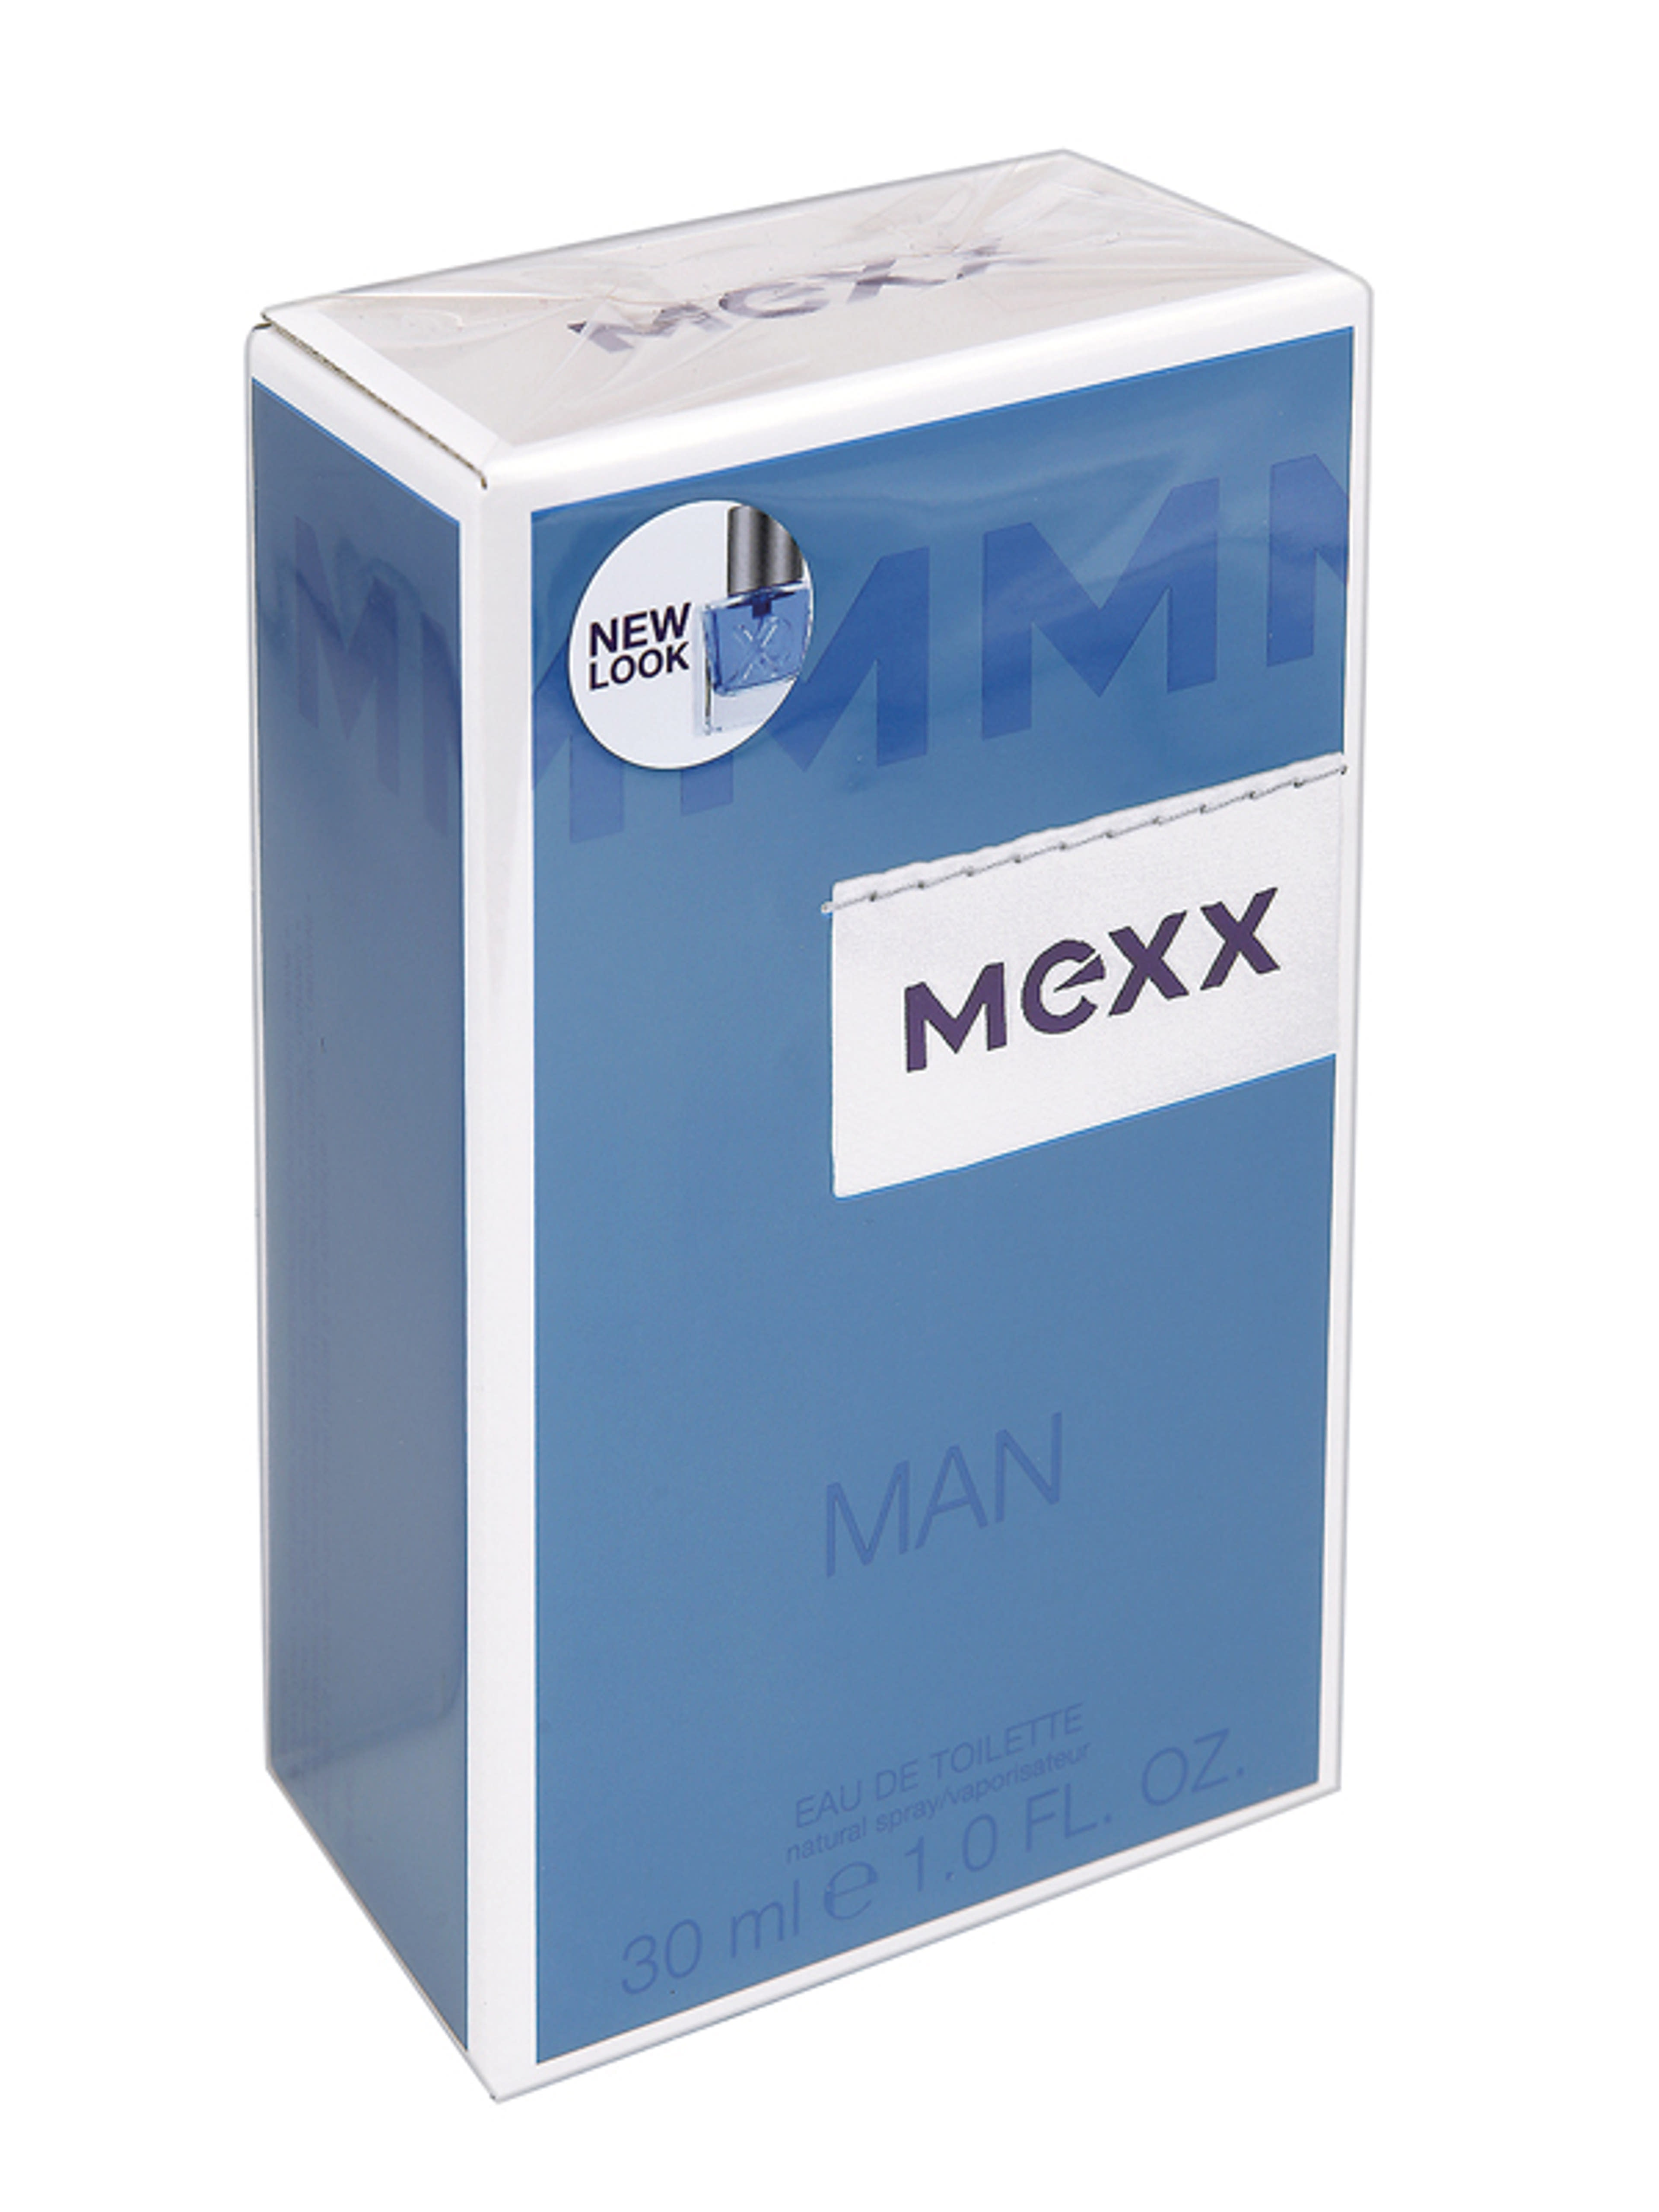 Mexx Man férfi Eau de Toilette - 30 ml-2